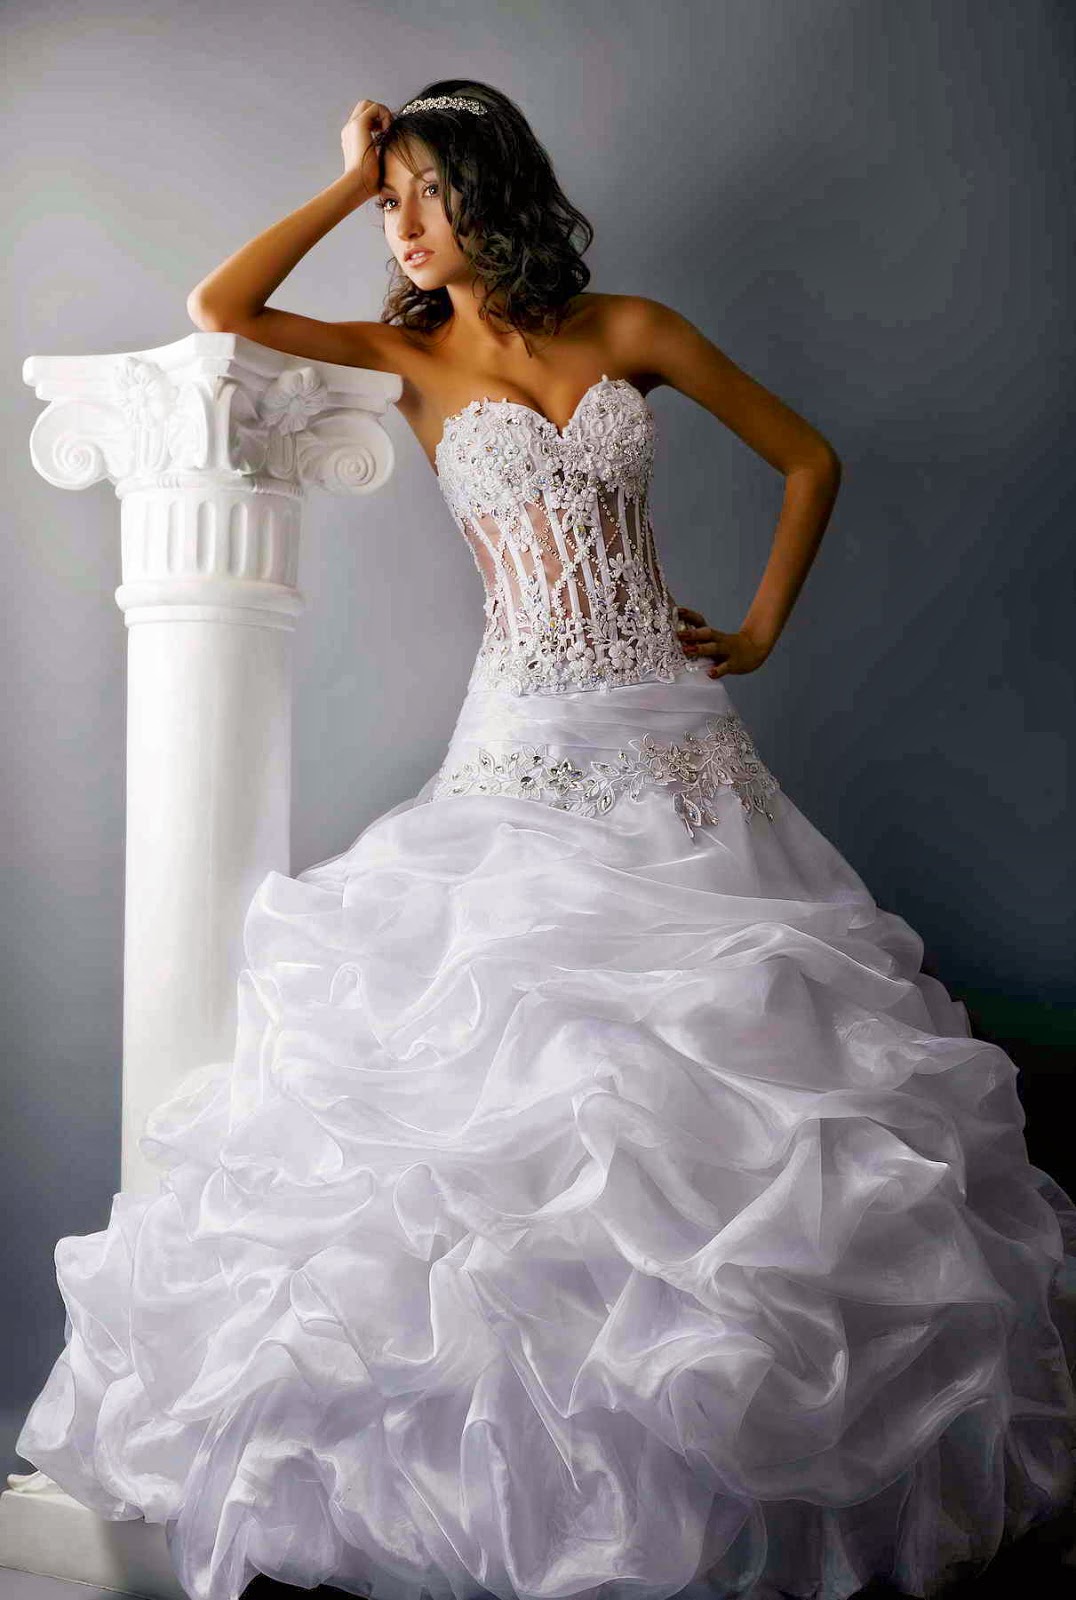 1001 fustane Fustane nuserie Wedding dresses